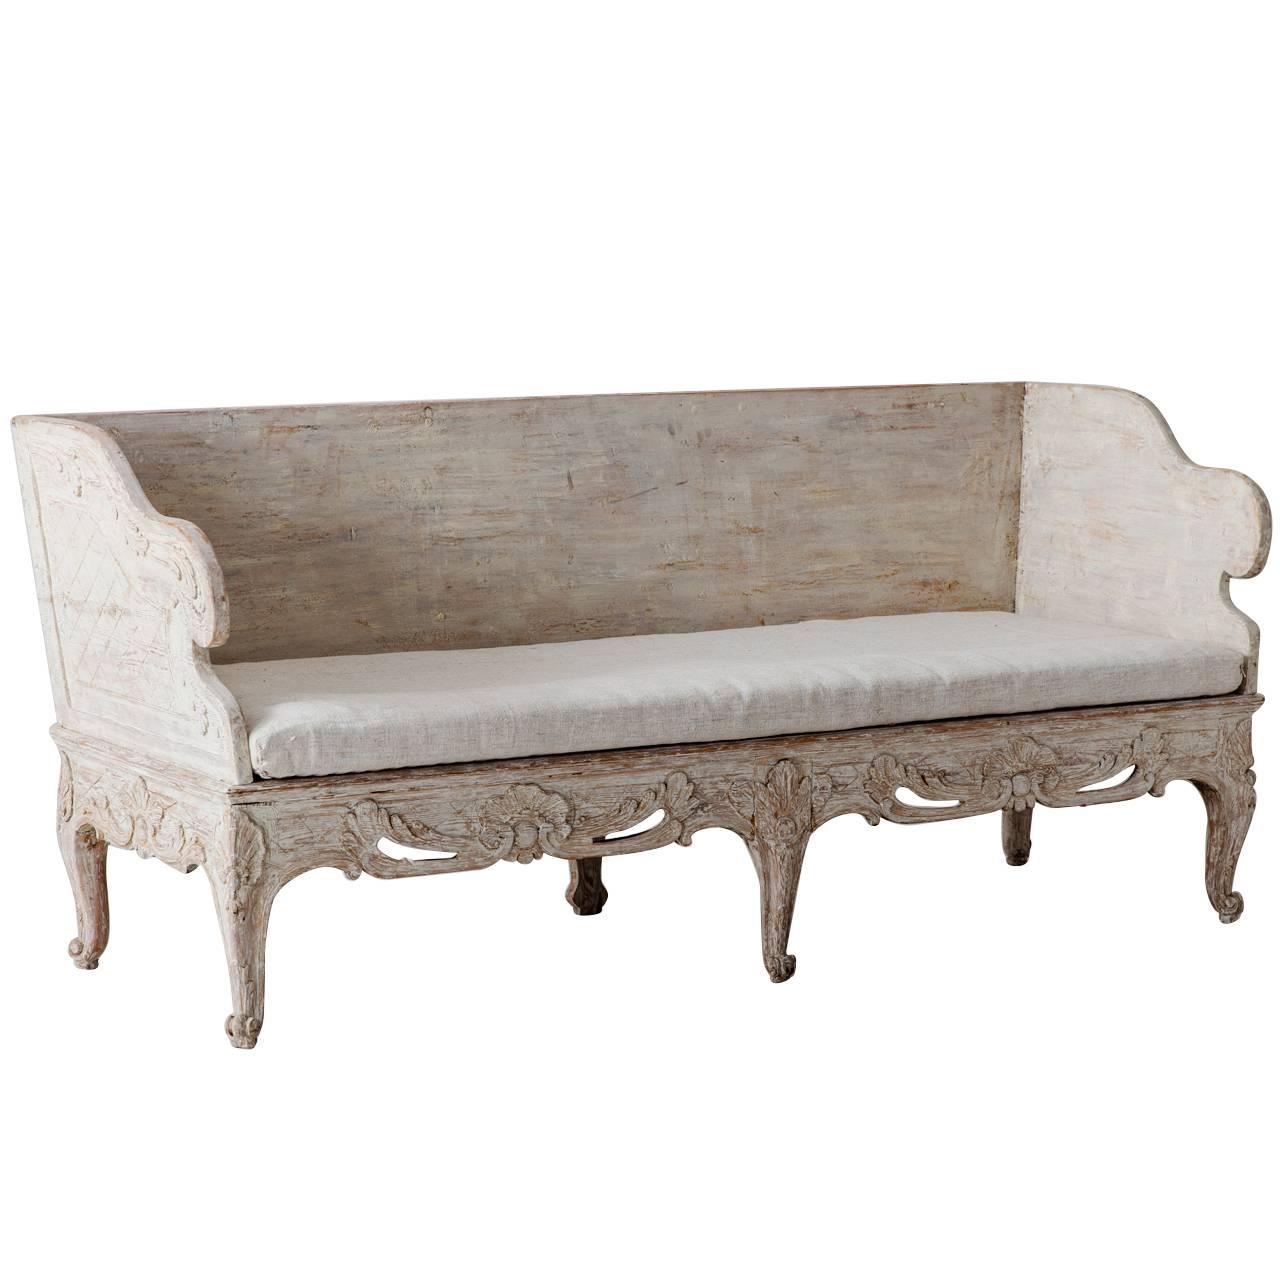 18th Century Swedish Rococo Period Trag Sofa Bench in Original Paint For Sale